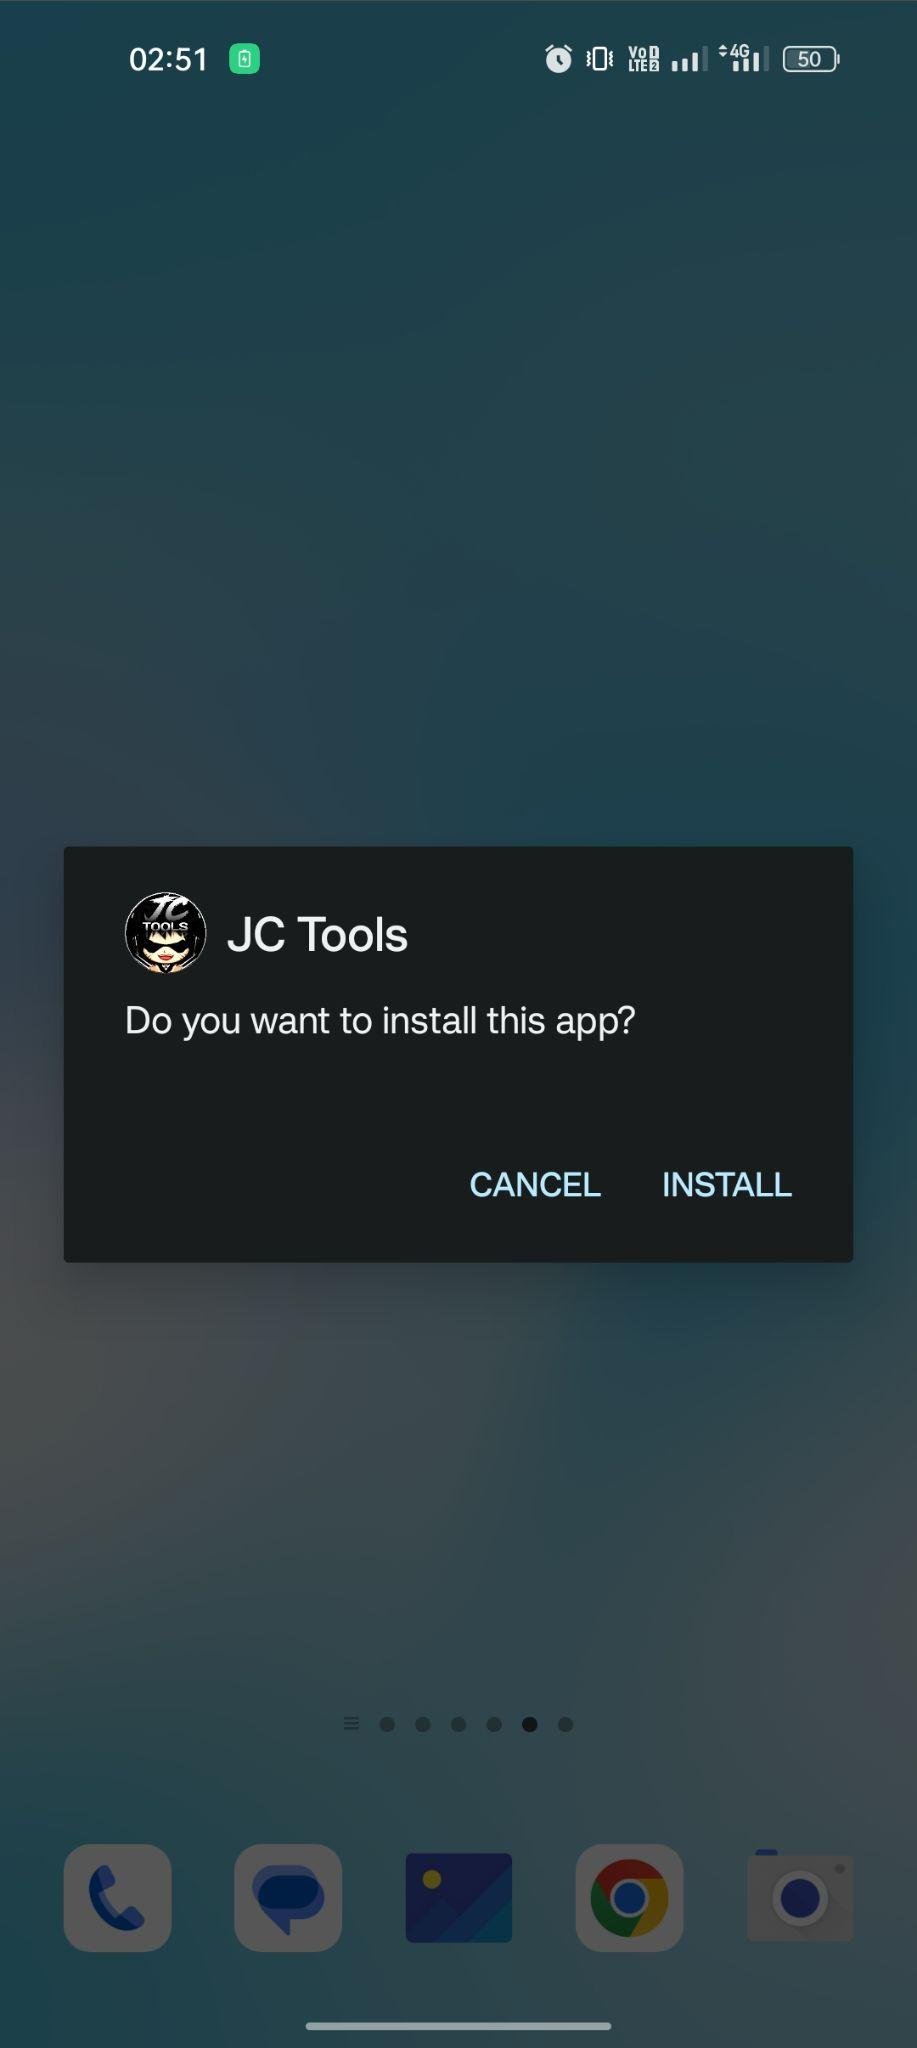 click on install